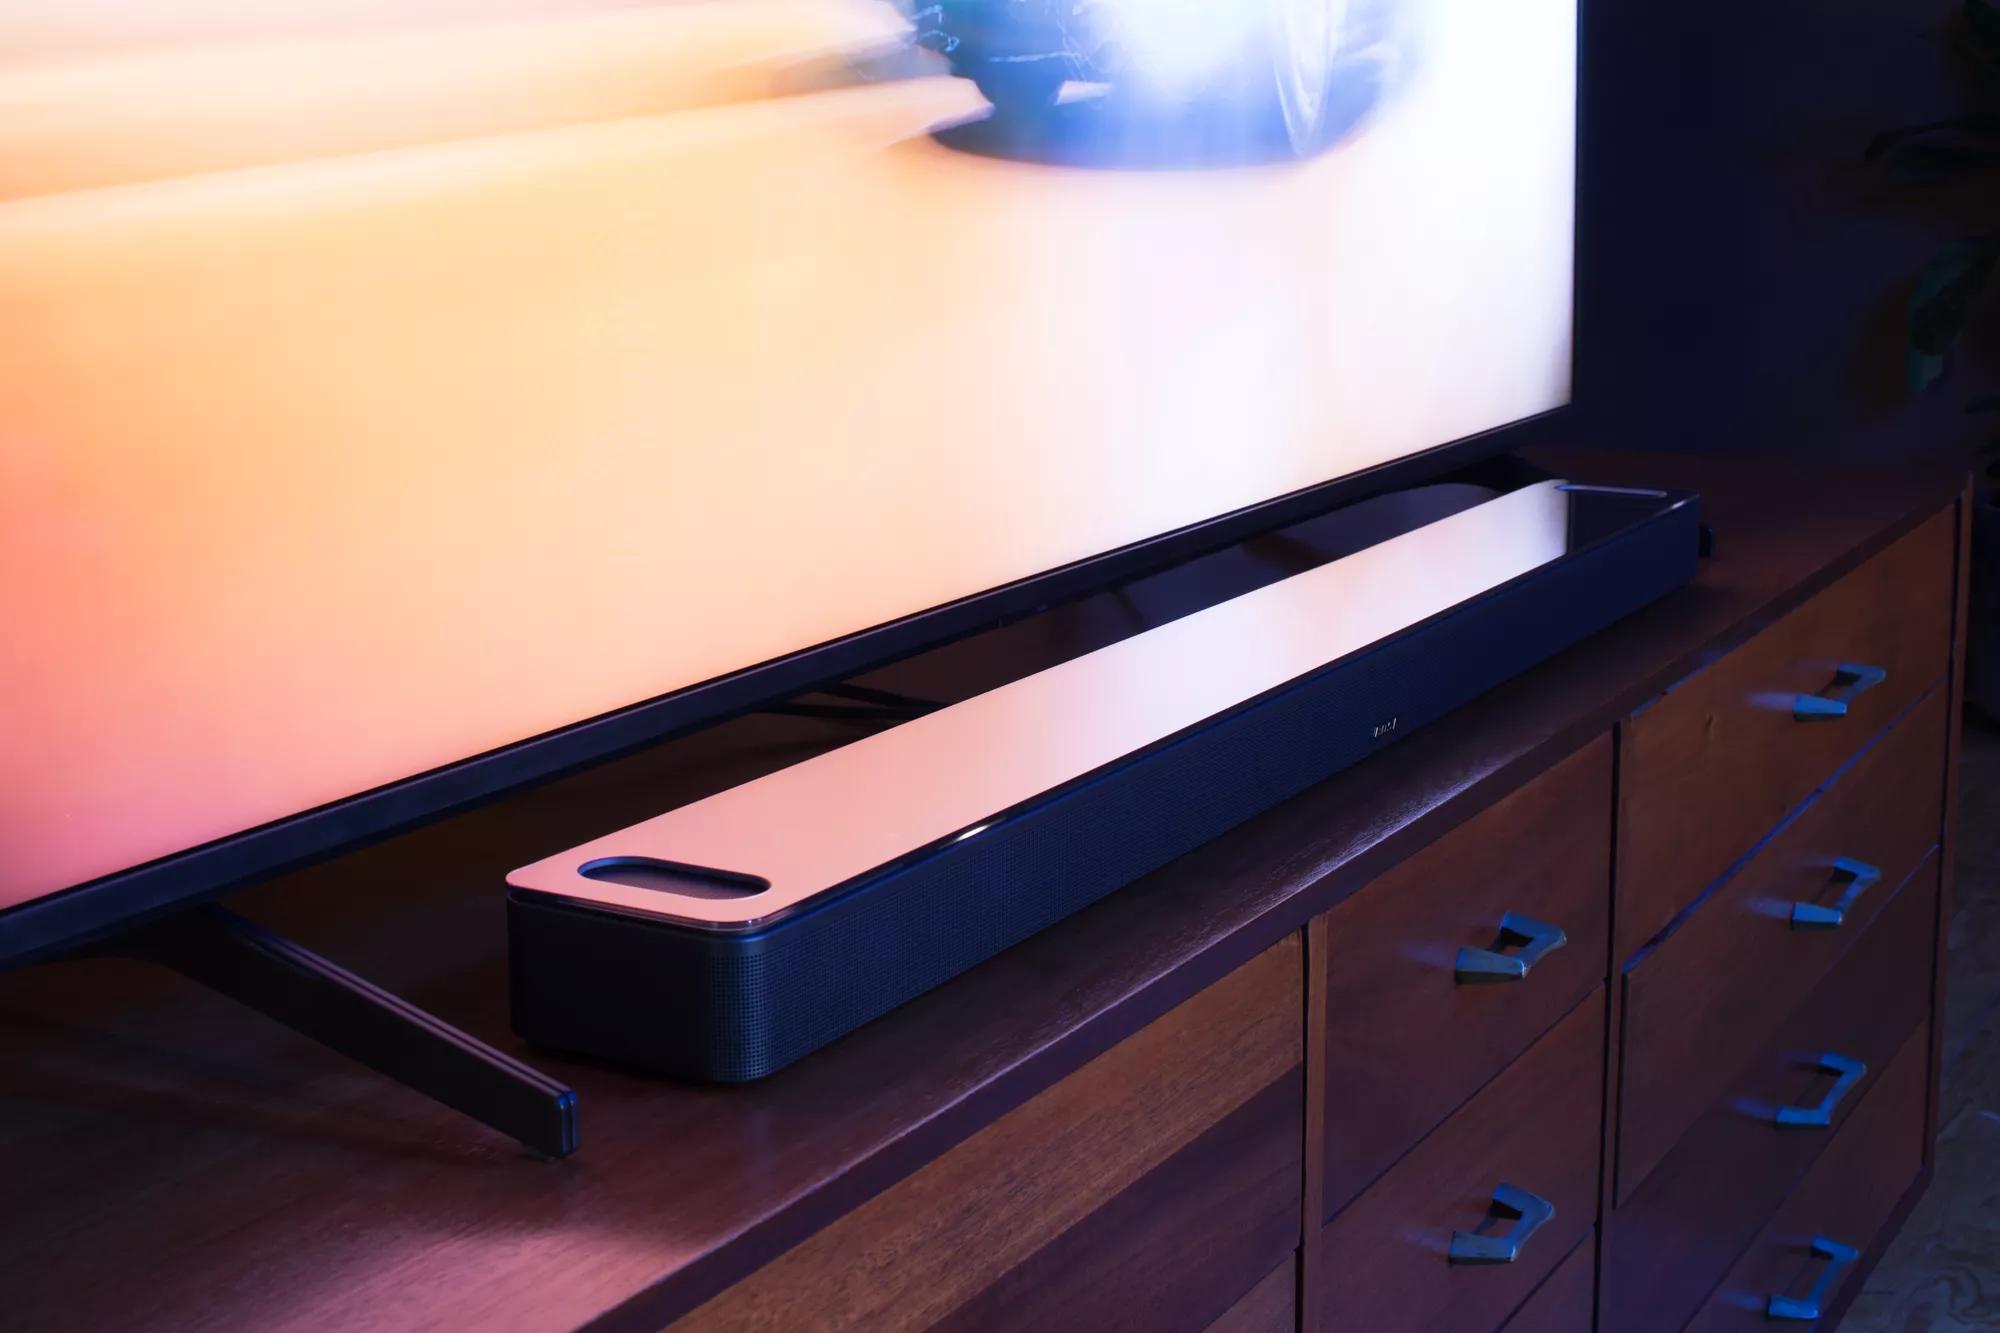 Bose Smart Ultra Soundbar on media console in front of flatscreen TV 